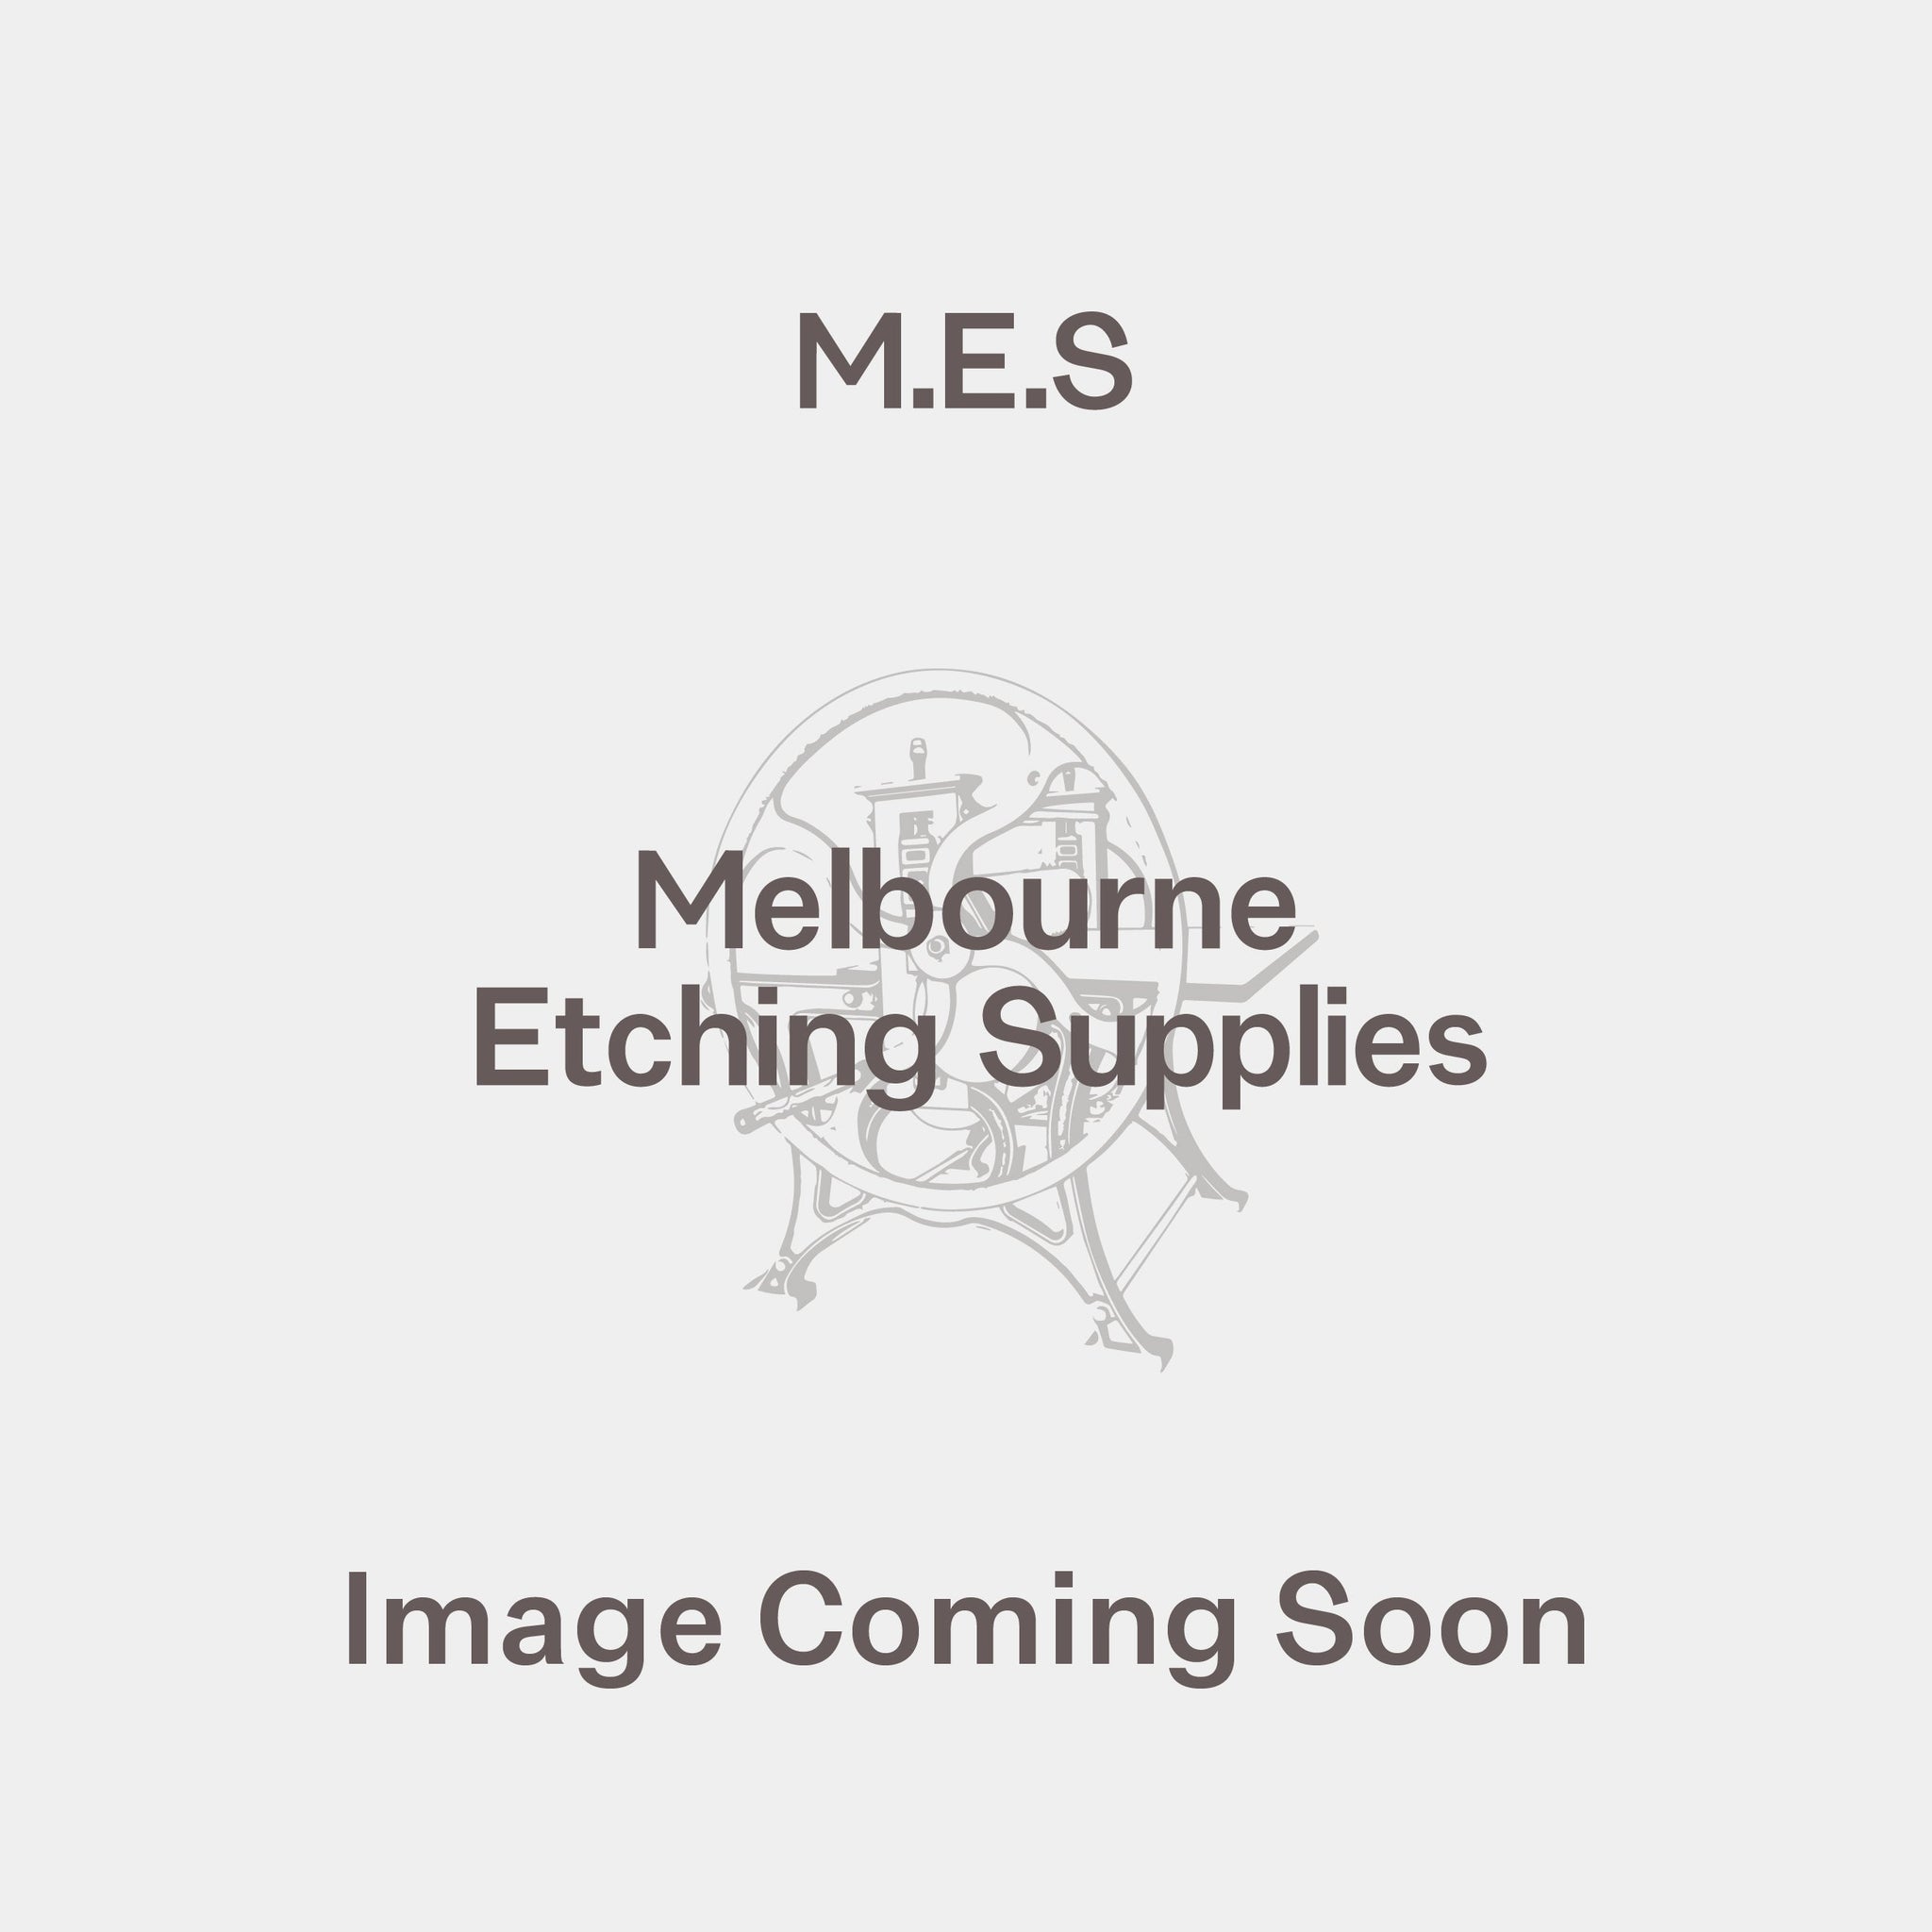 Somerset Enhanced Textured 225gsm - Melbourne Etching Supplies